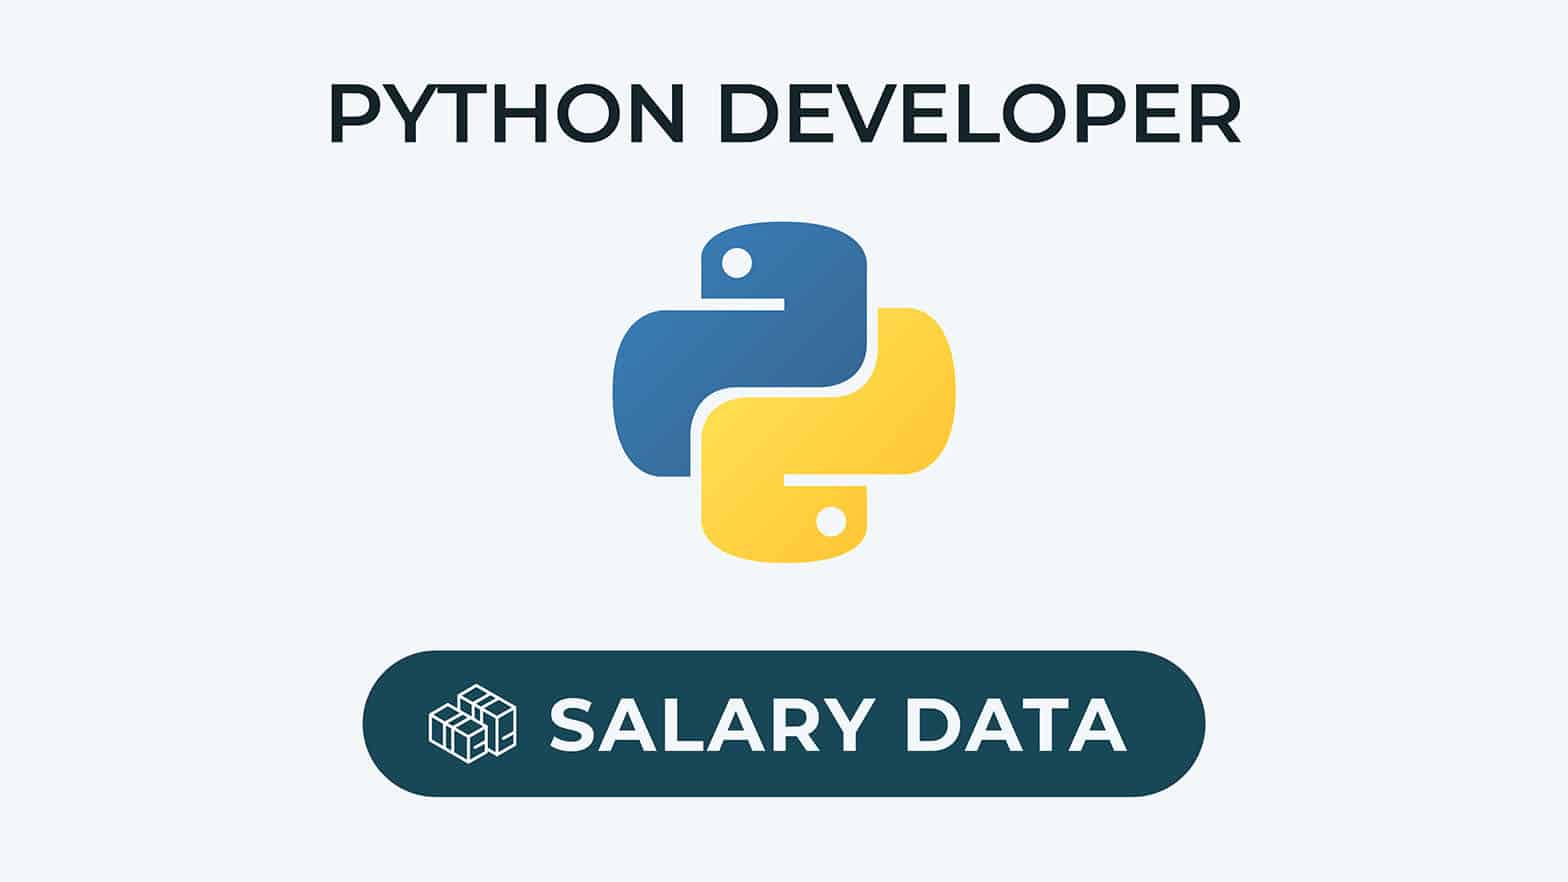 Python developer salary